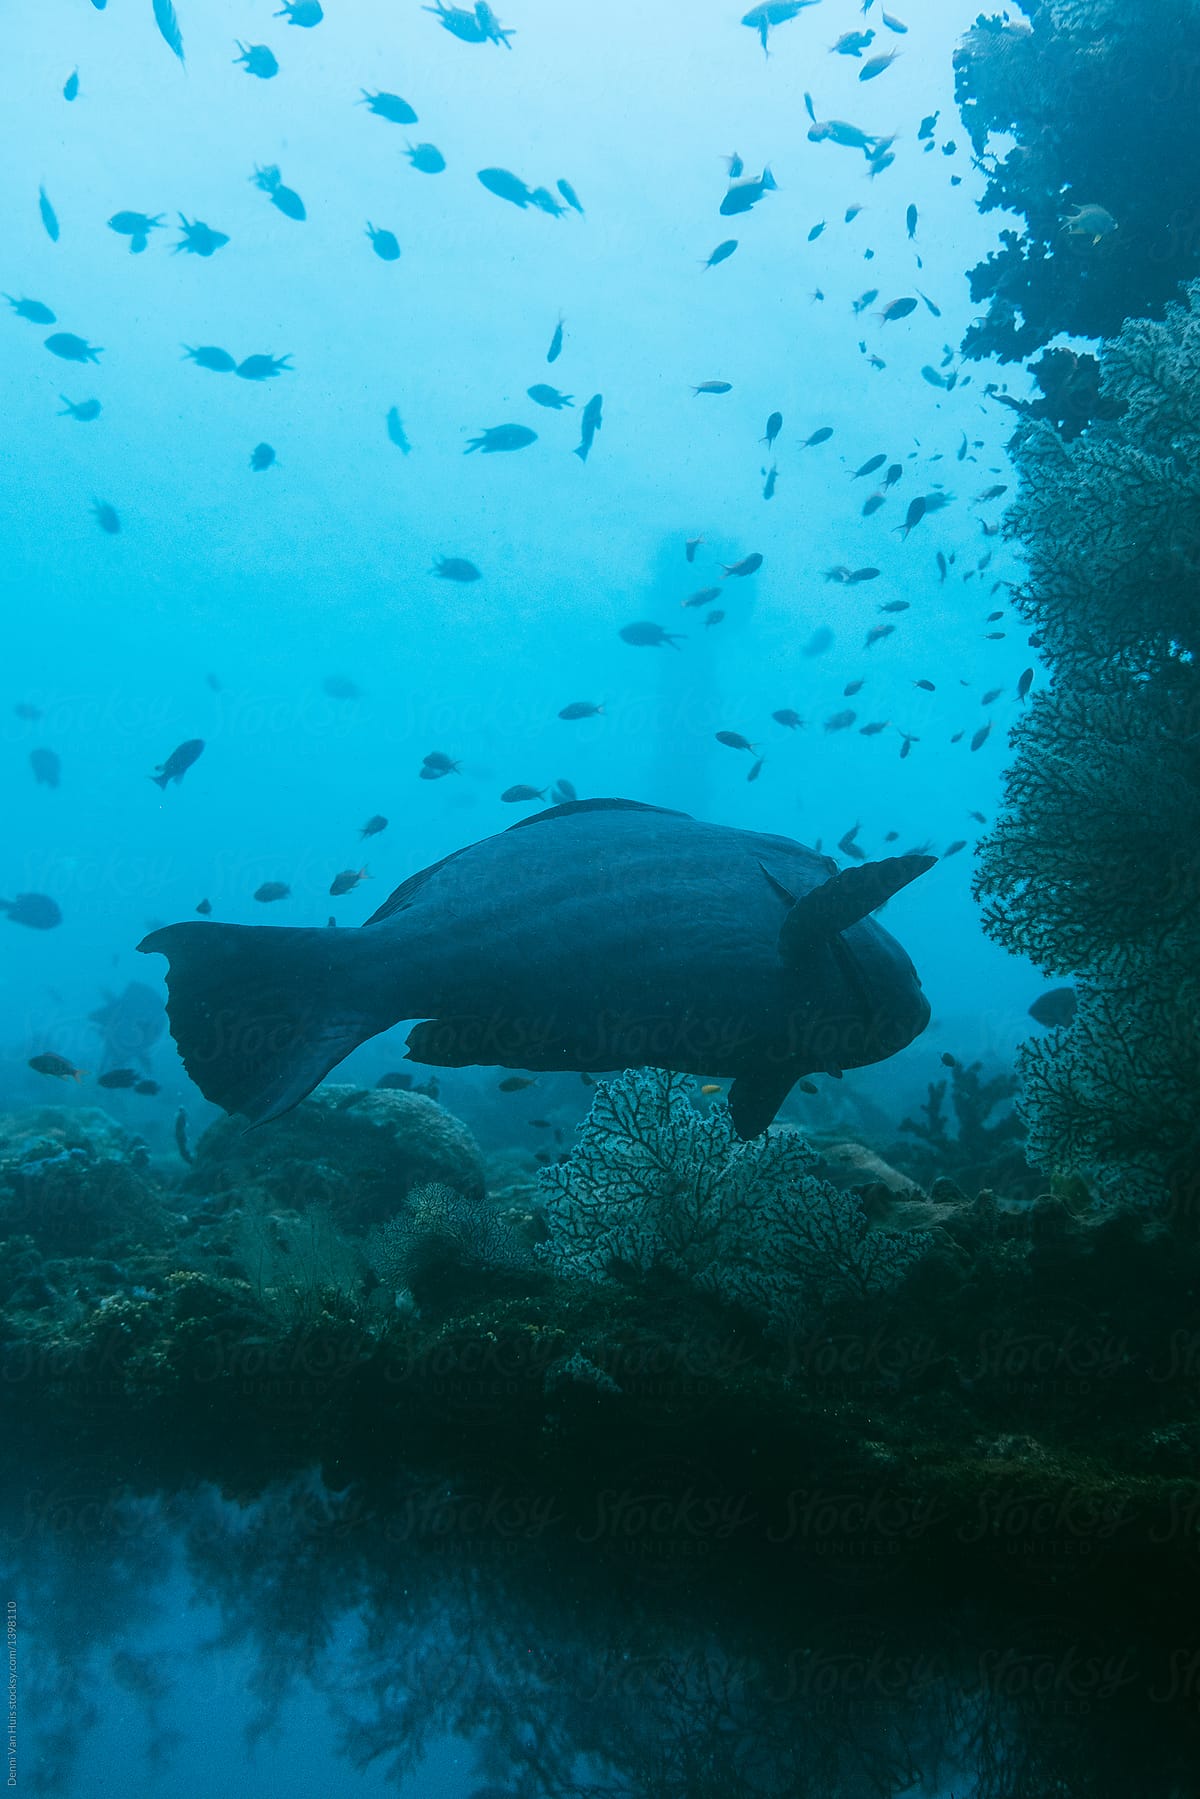 Big fish swimming underwater through a shipwreck.